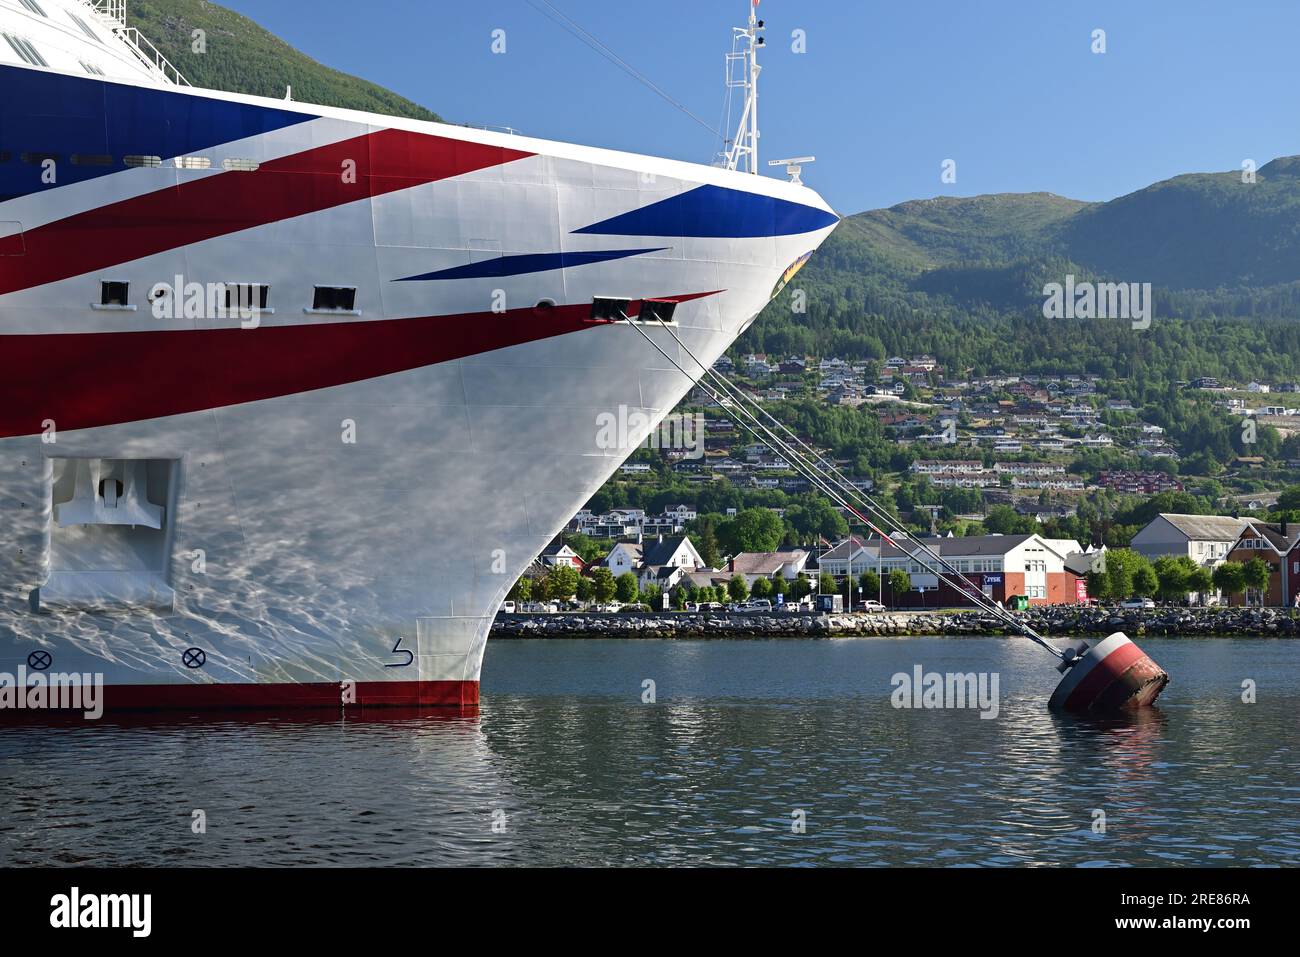 https://c8.alamy.com/comp/2RE86RA/po-cruise-ship-britannia-moored-at-nordfjordeid-in-western-norway-2RE86RA.jpg